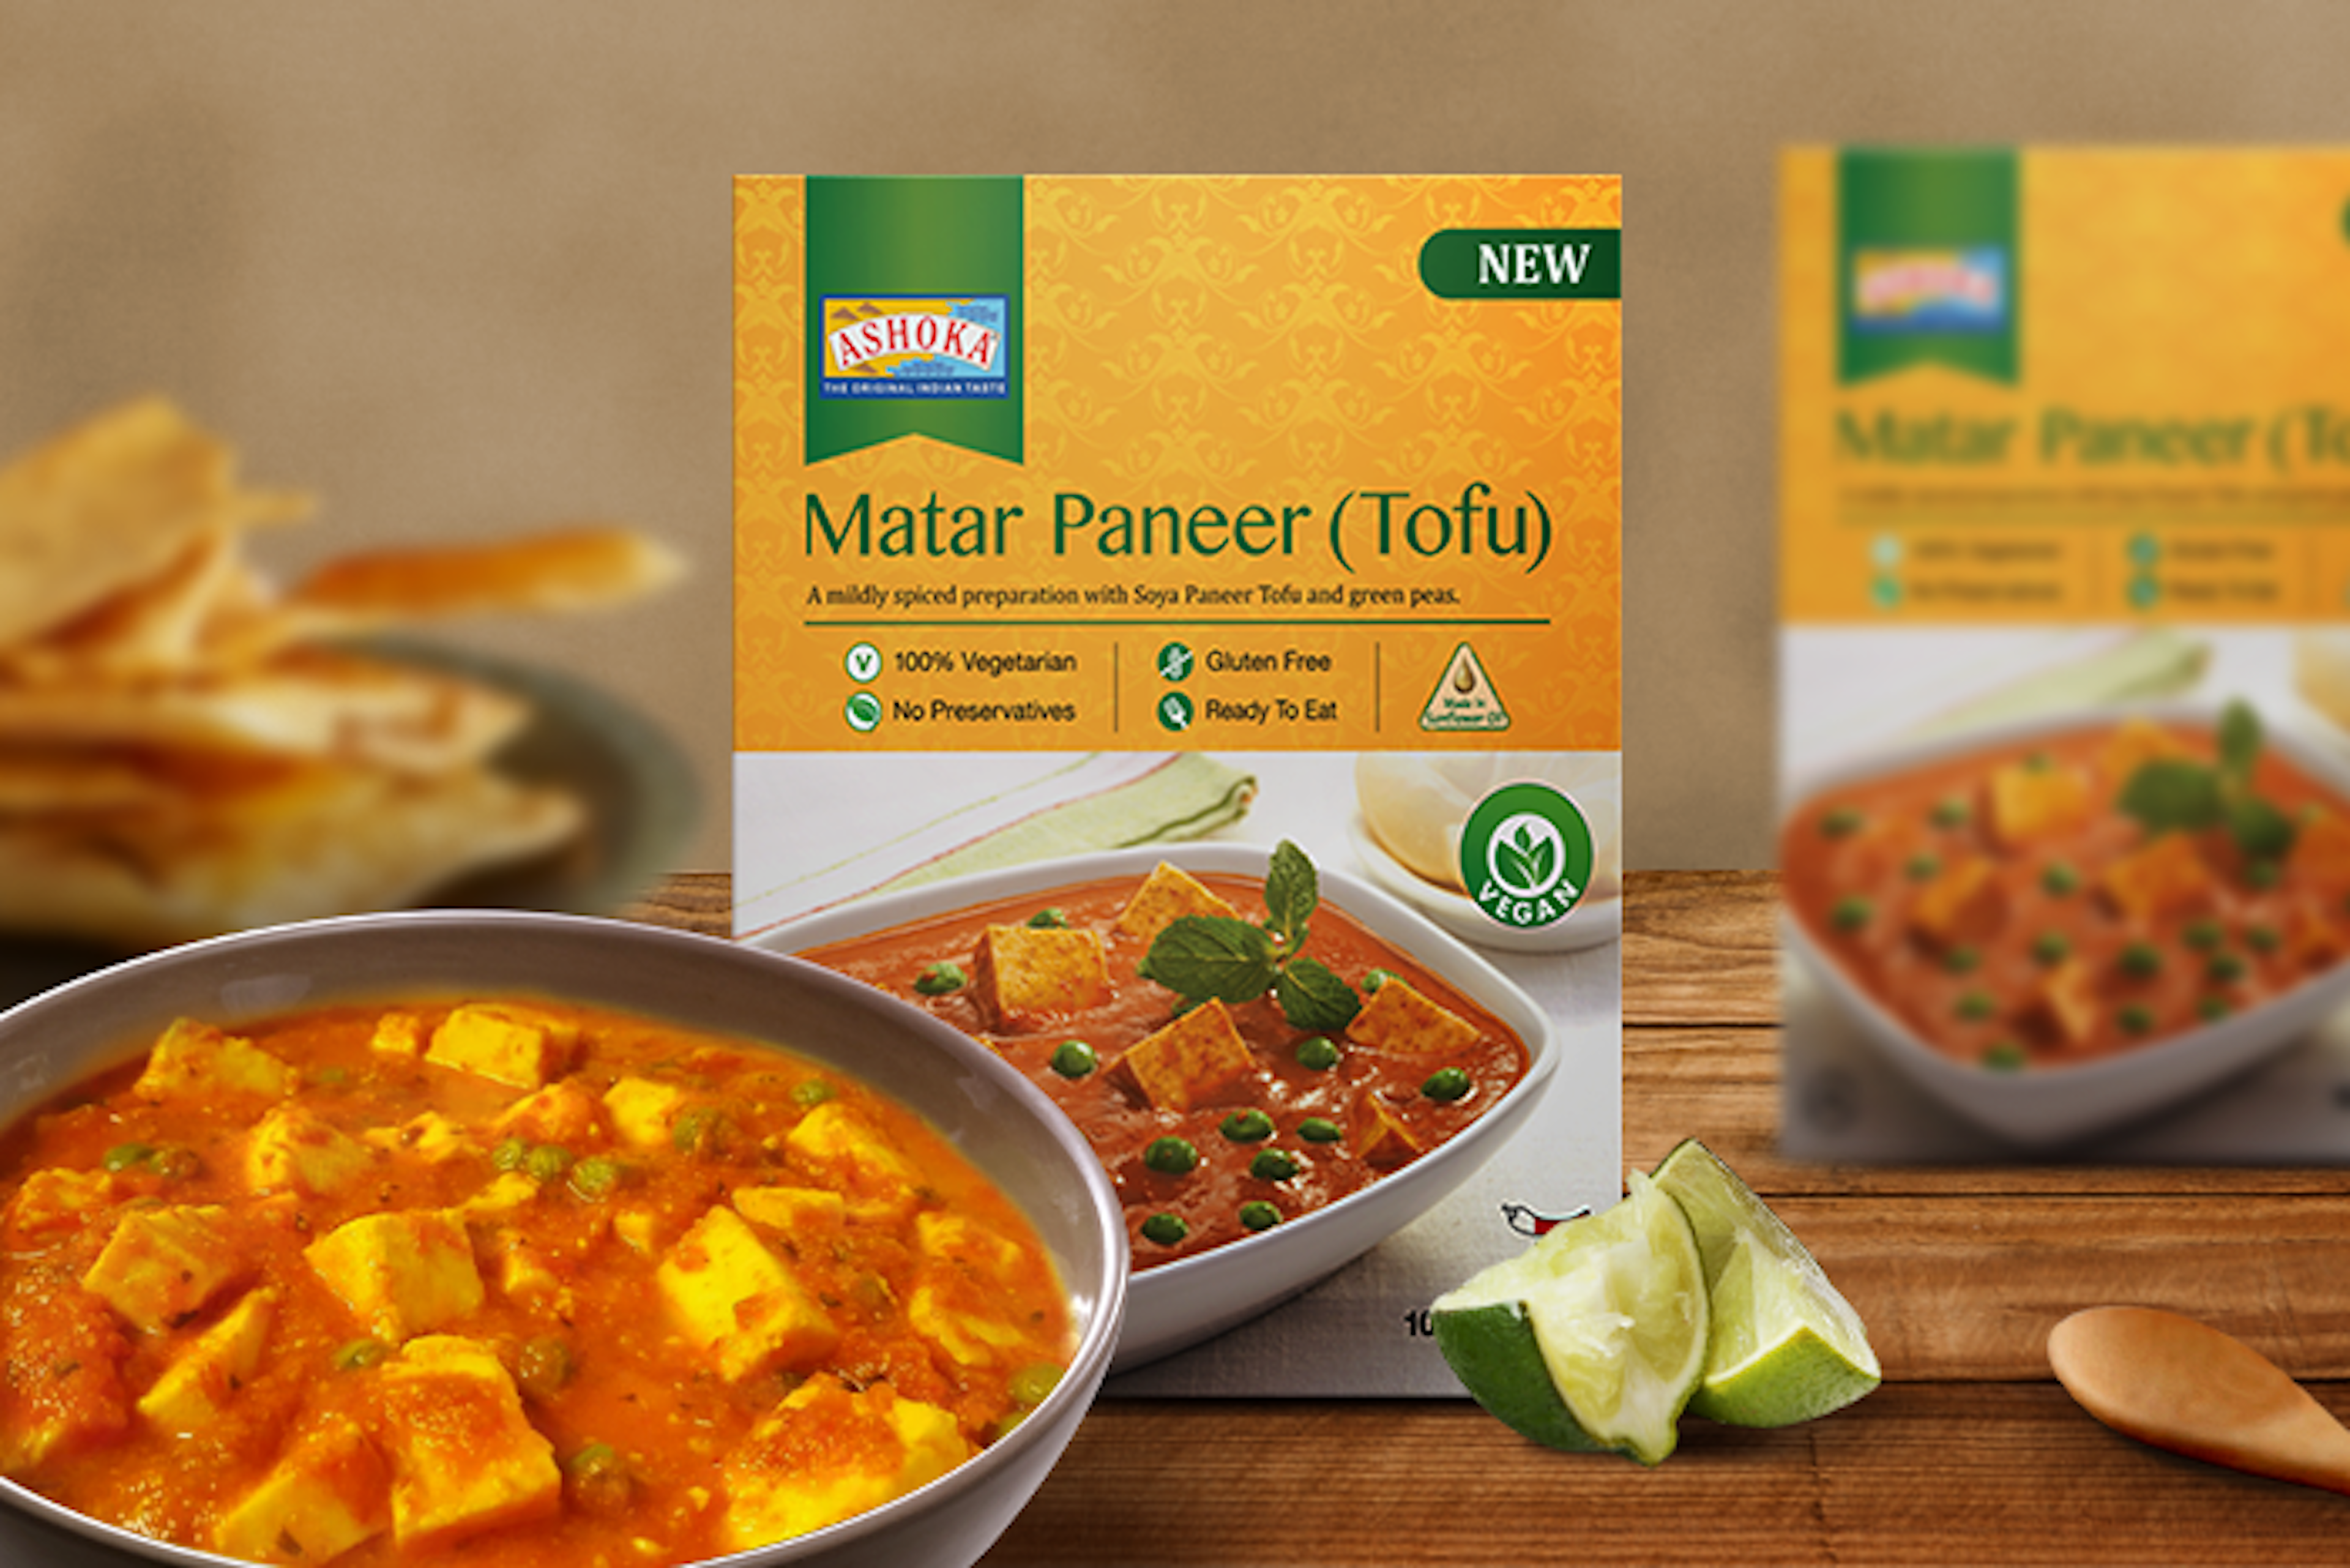 Zutaten von Ashoka Matar Paneer Tofu: Tofu, Erbsen, Tomaten und Gewürze.